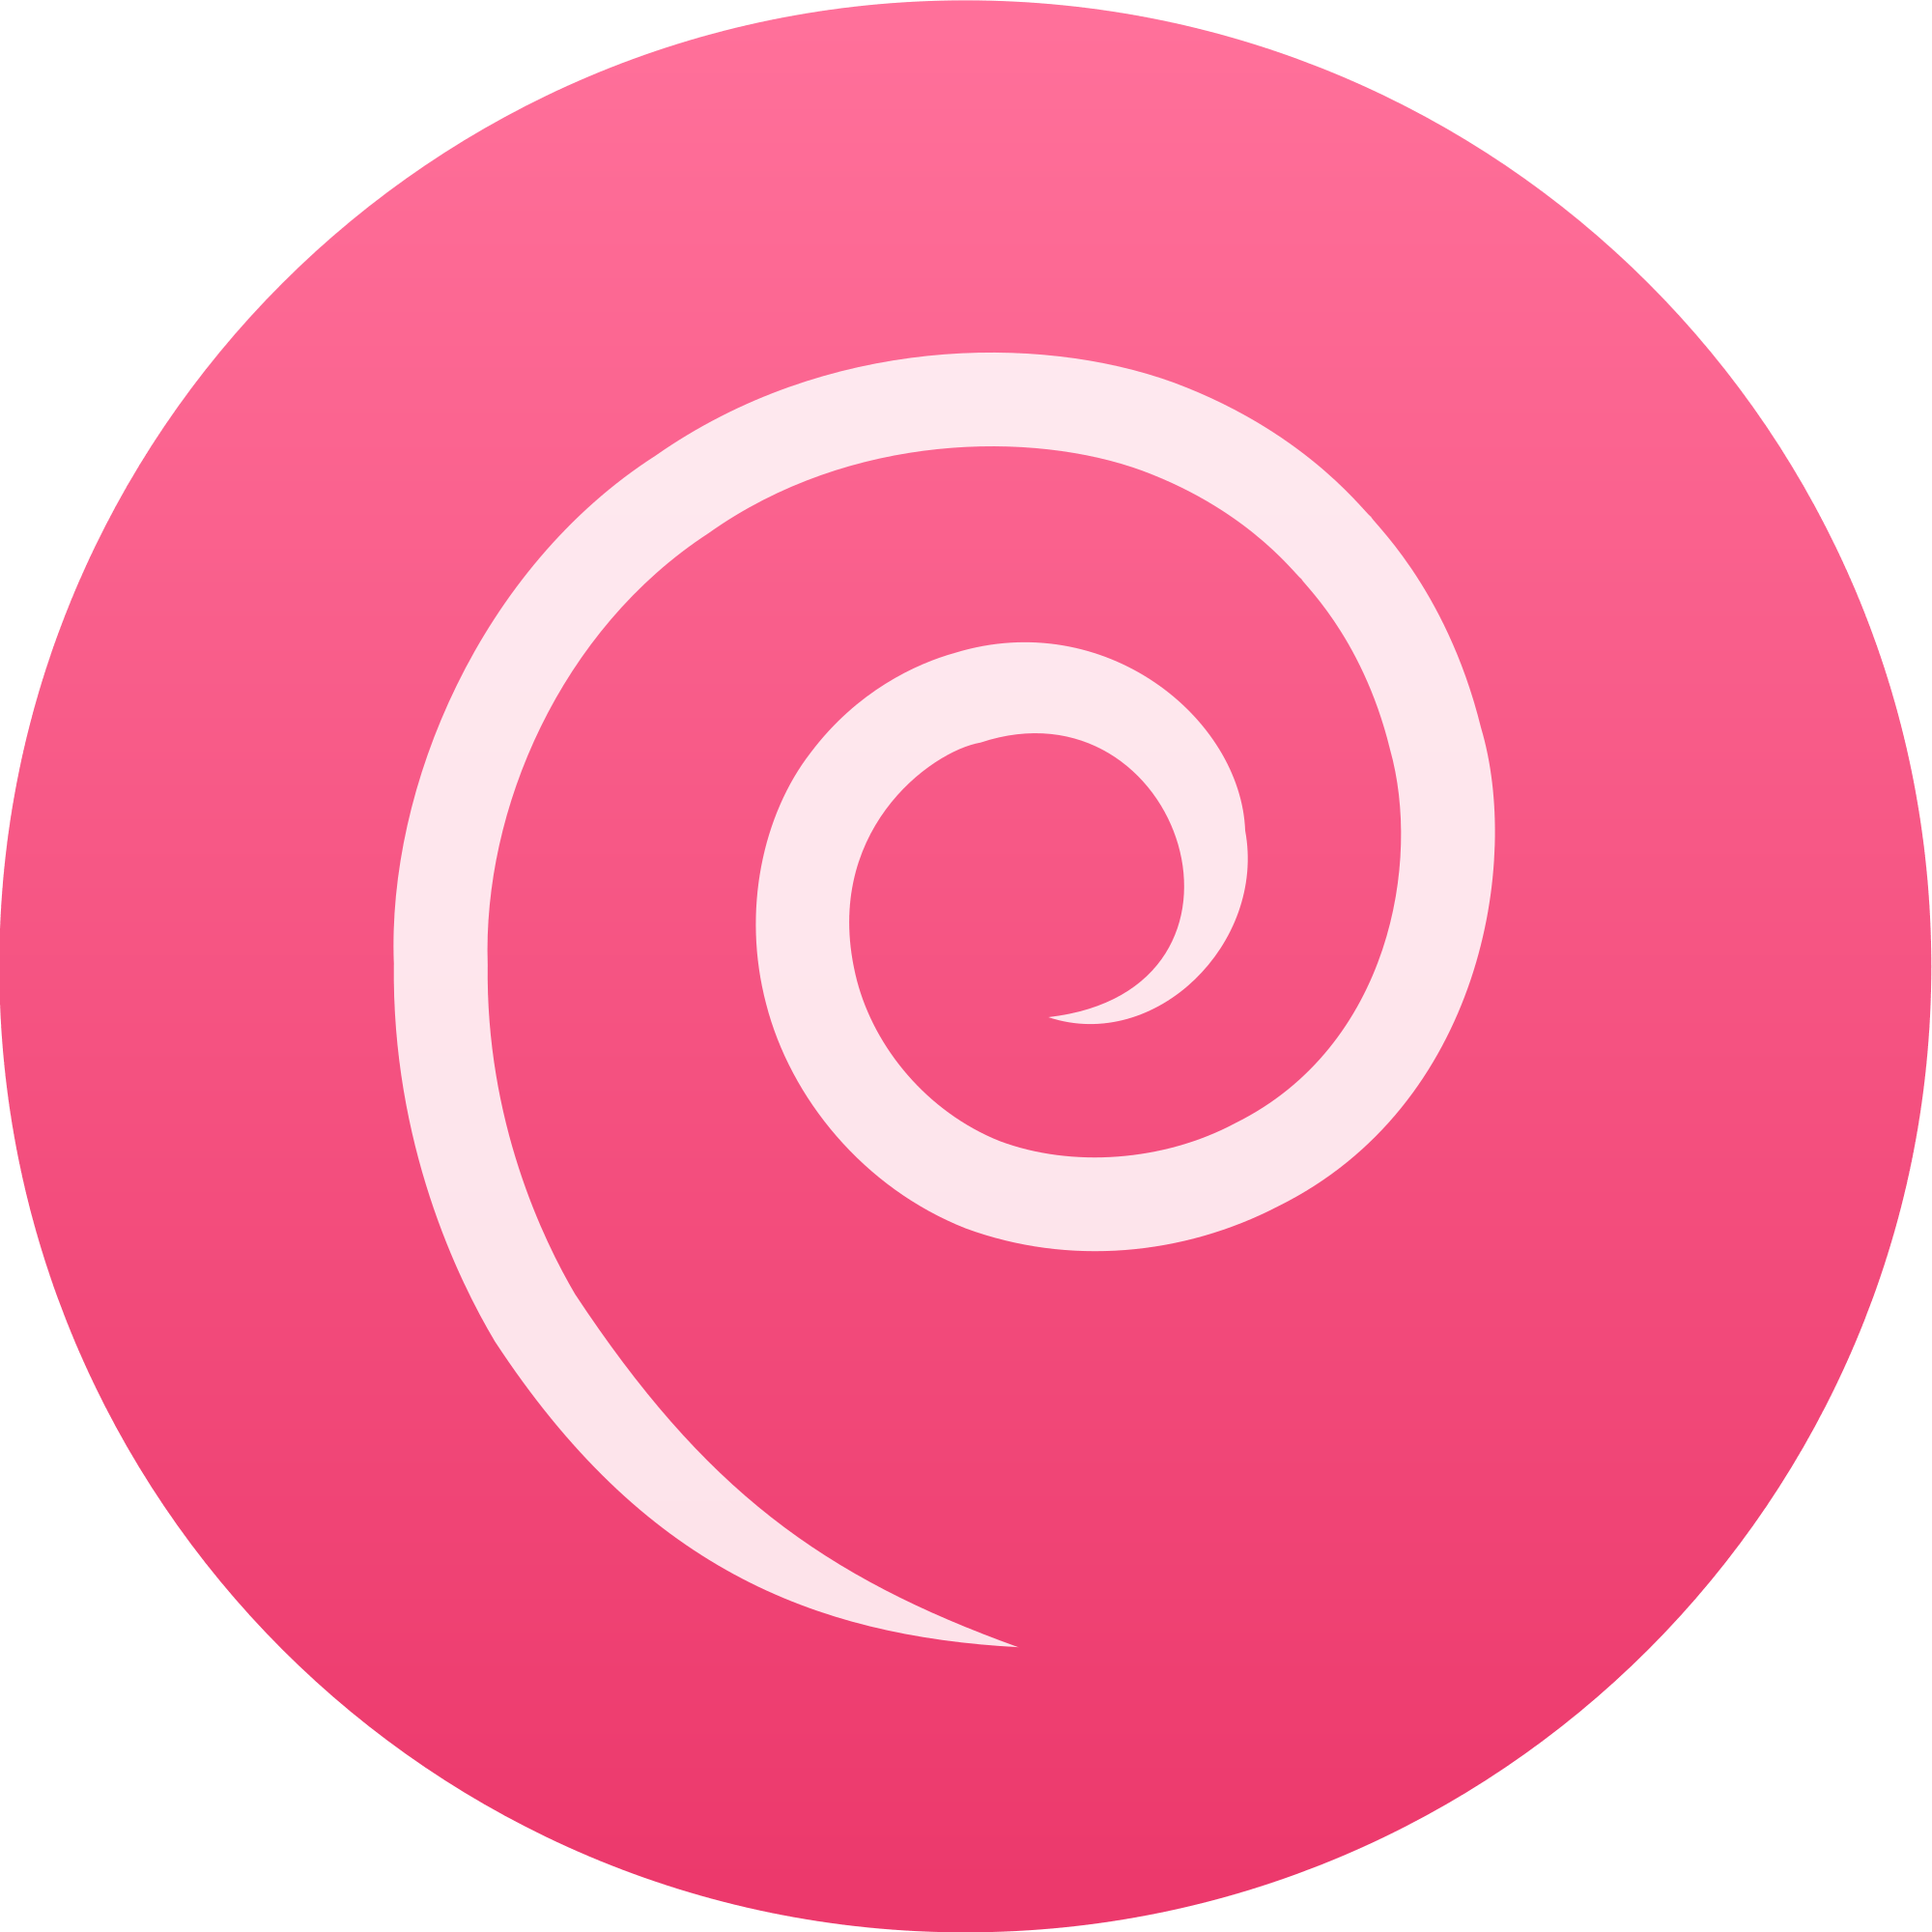 Debian Logo - File:Antu distributor-logo-debian.svg - Wikimedia Commons